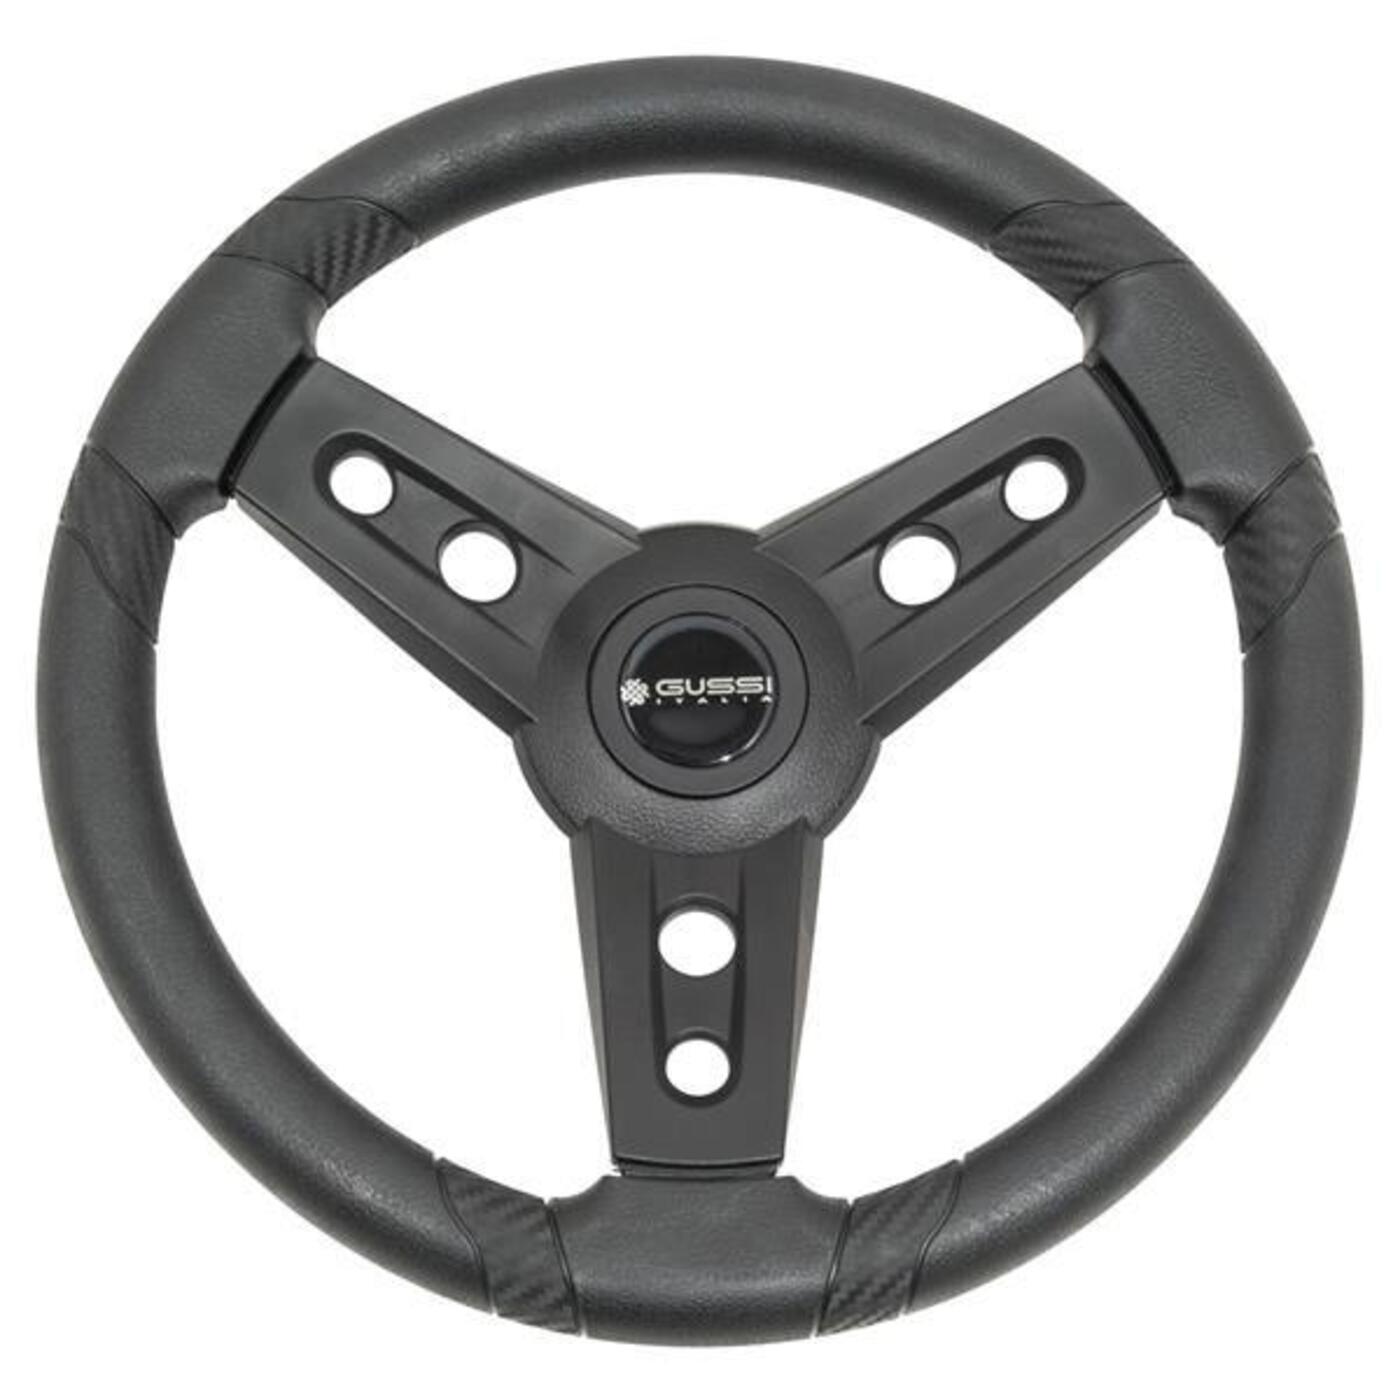 Gussi Italia Lugana Black Steering Wheel For All Club Car DS Models 06-118